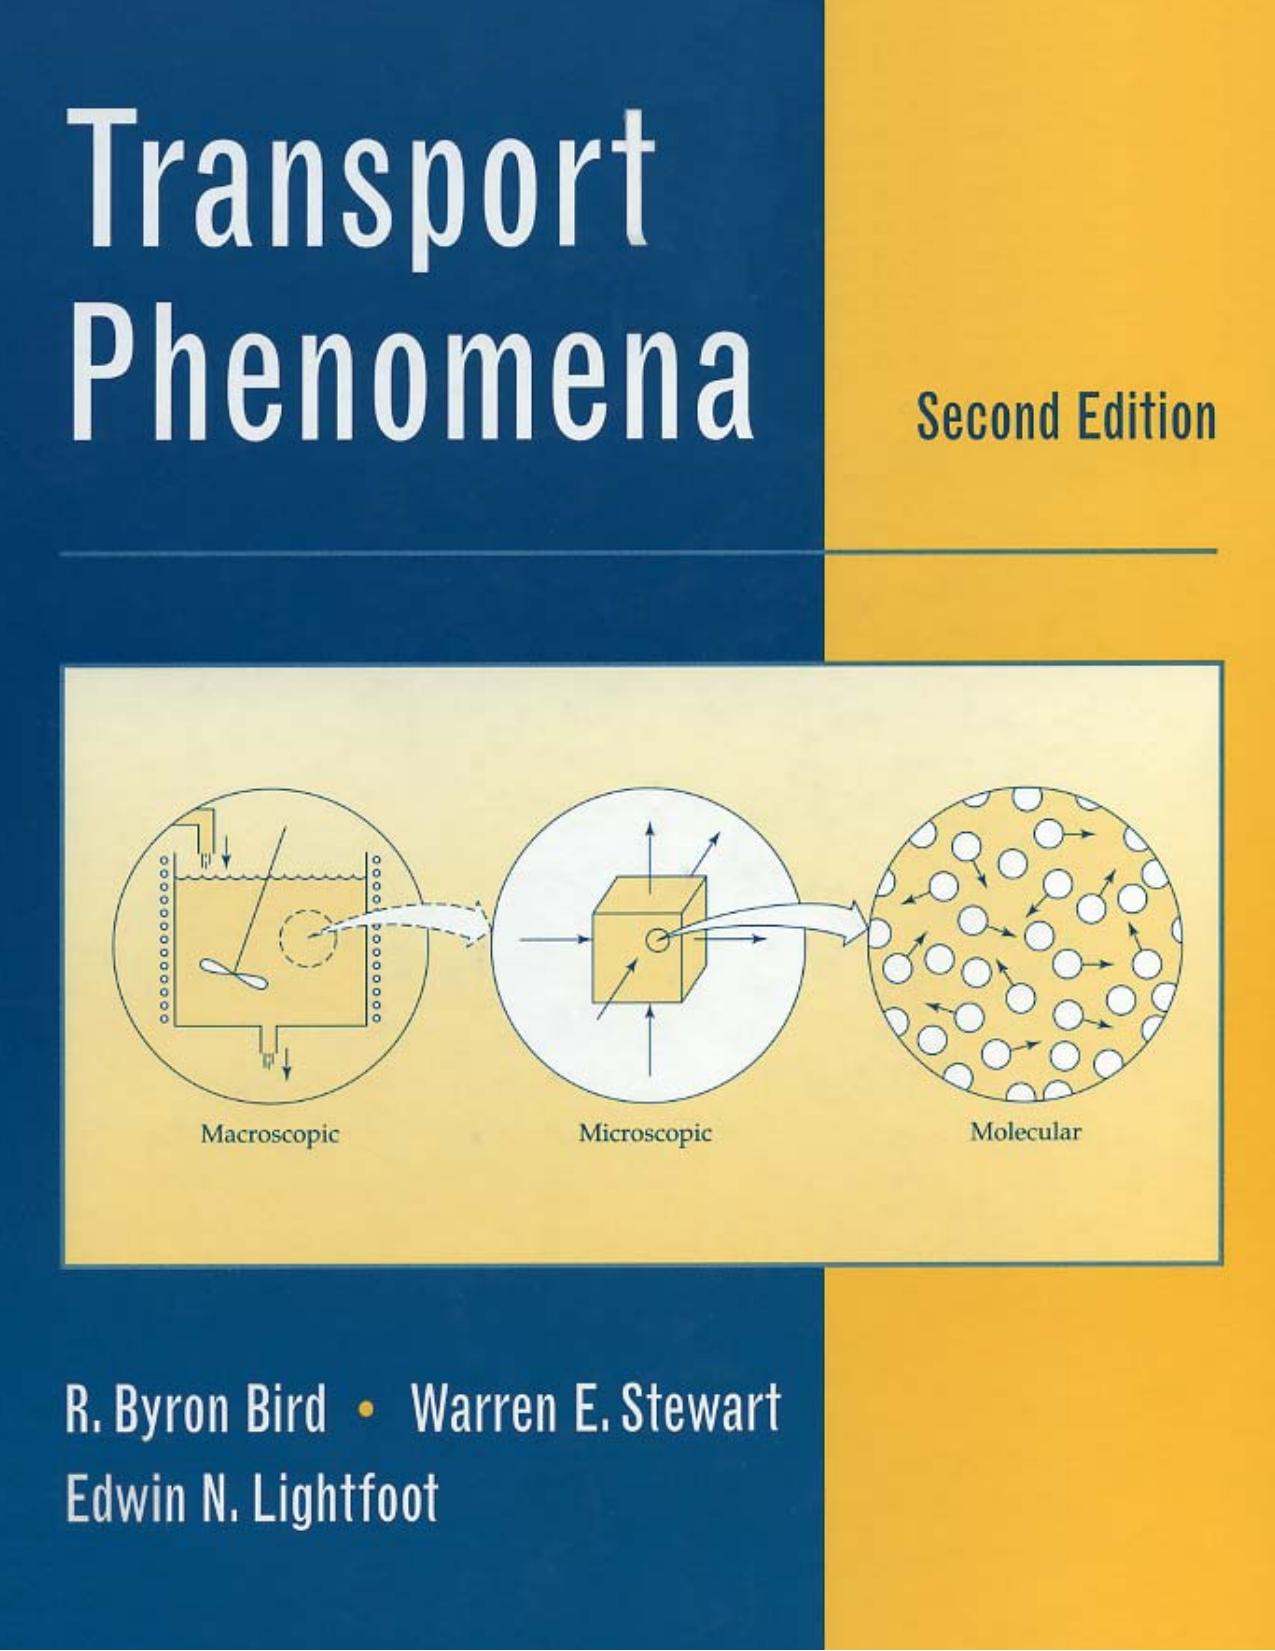 Transport Phenomena-Lightfoot et al                                                                                                      2002